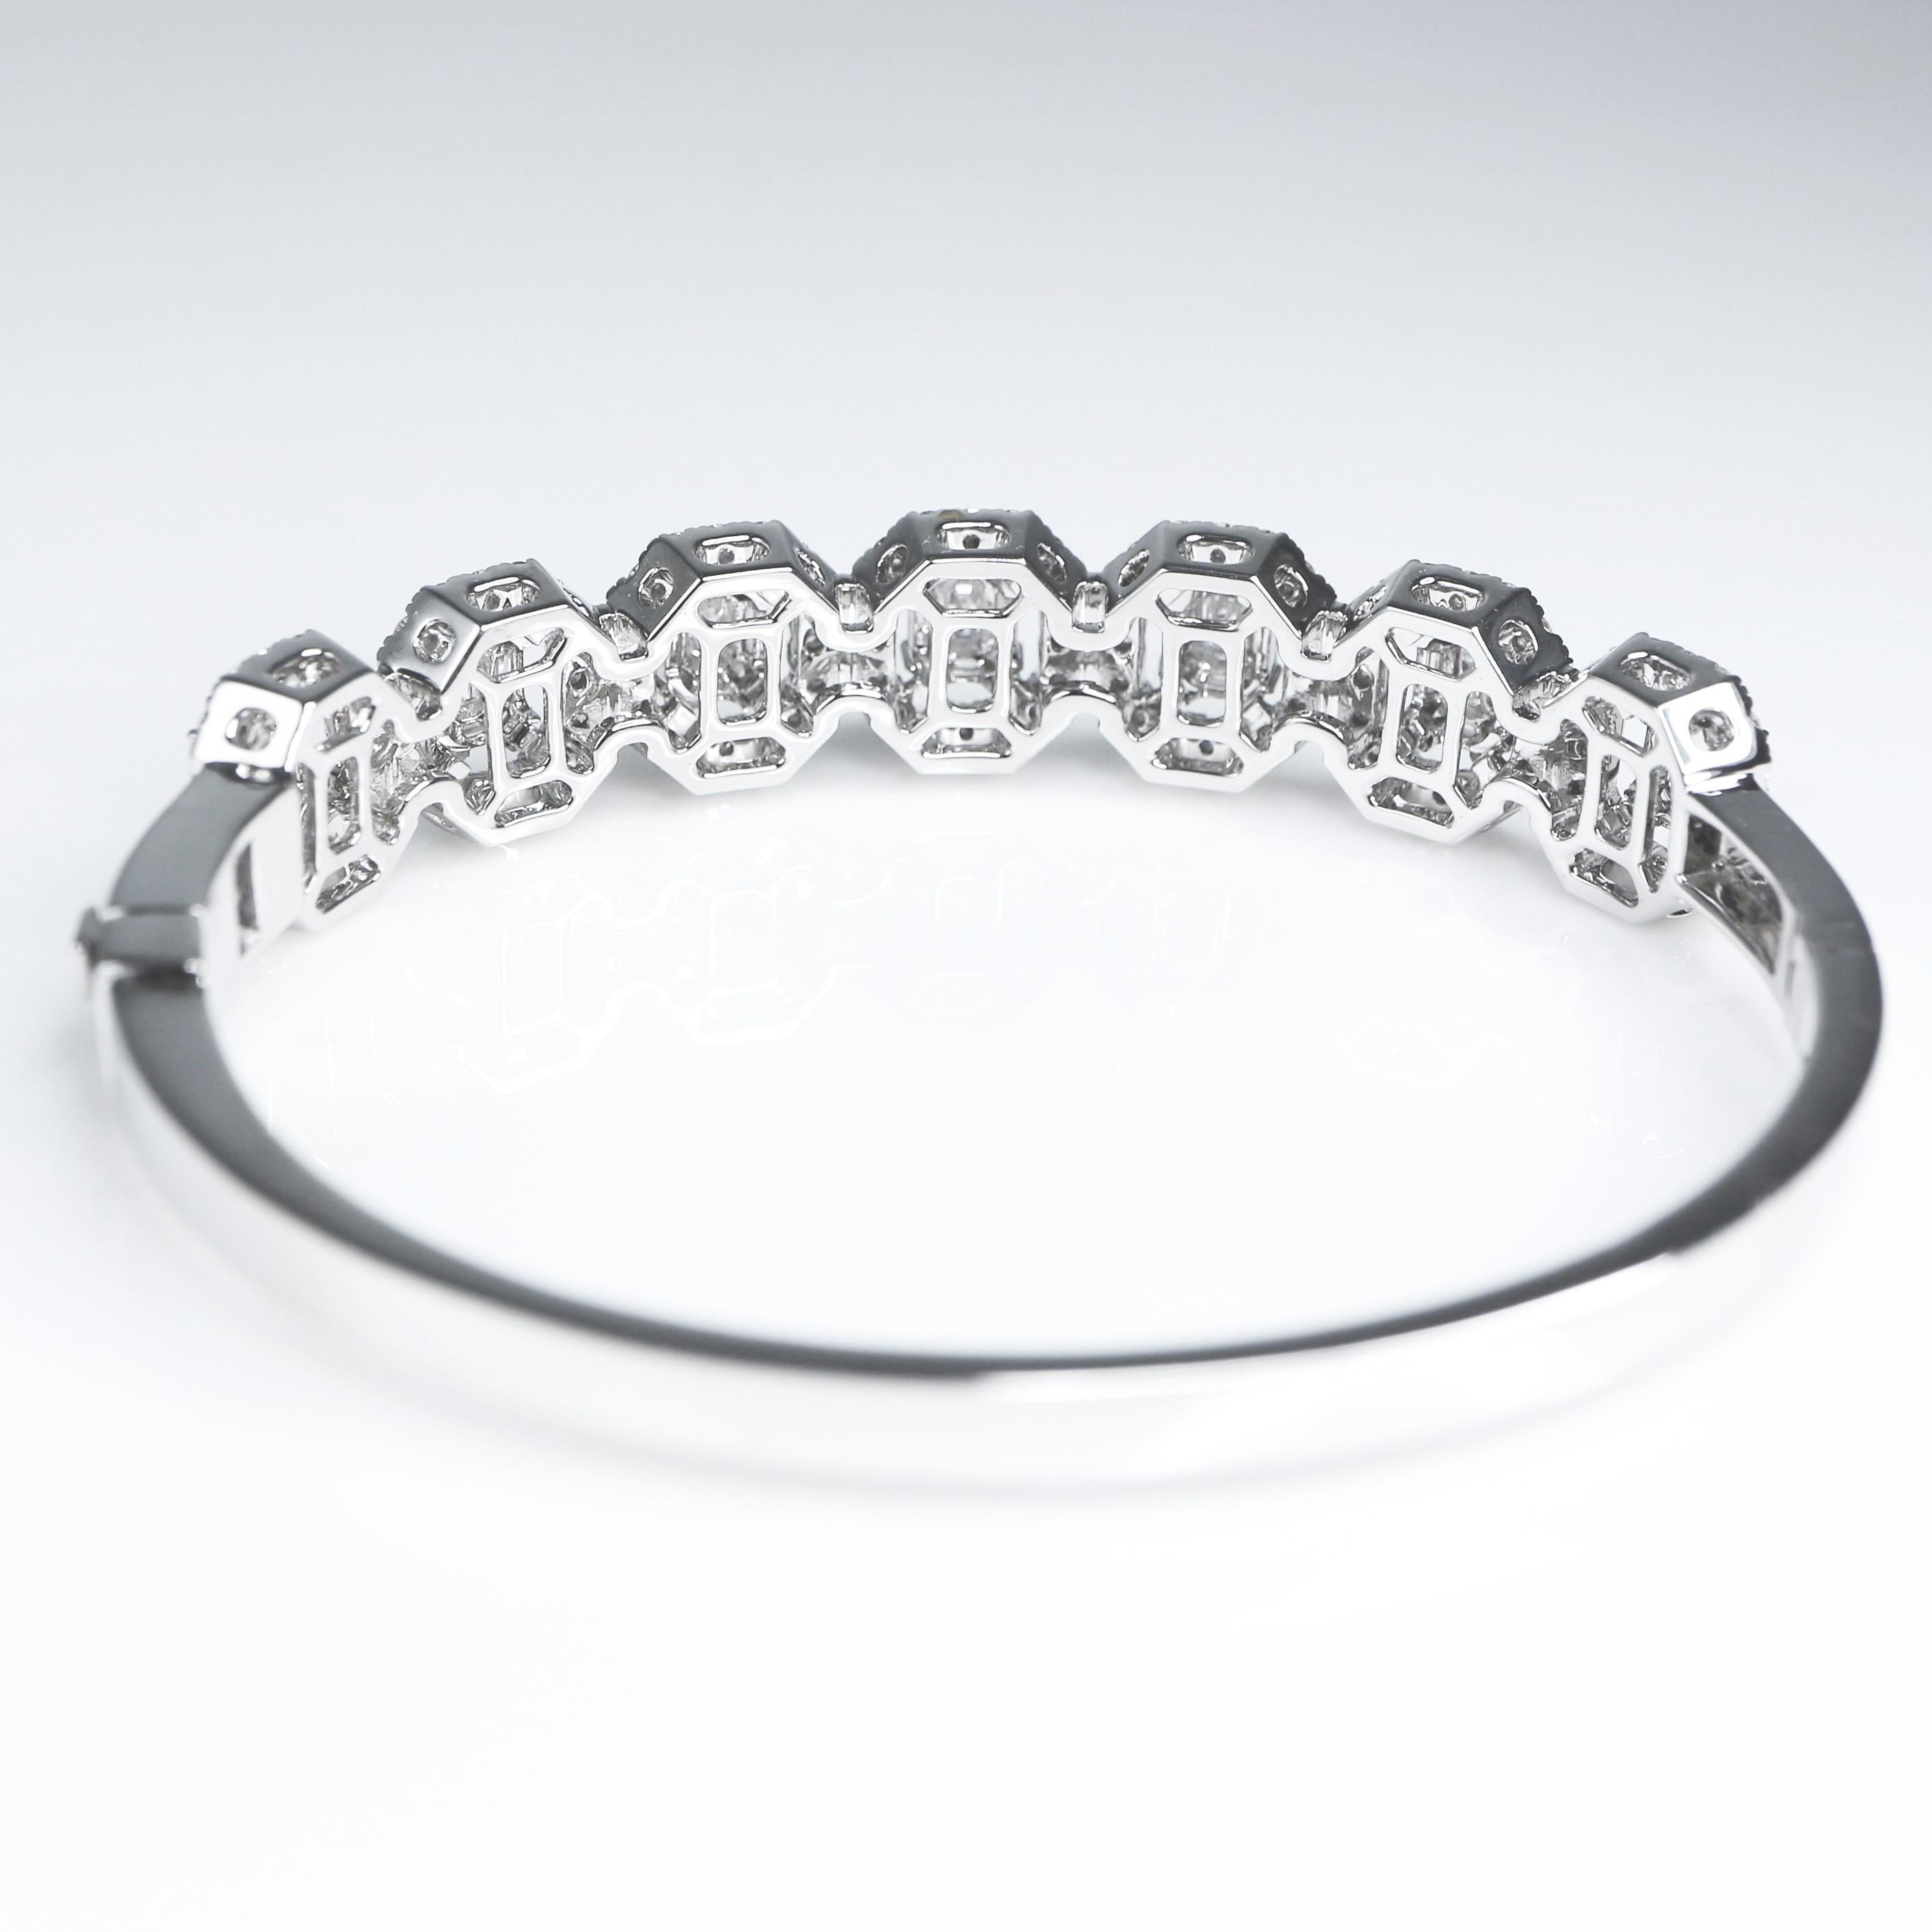 IGI 14k 3.92 Carat Diamond Antique Art Deco Bangle Bracelet For Sale 1